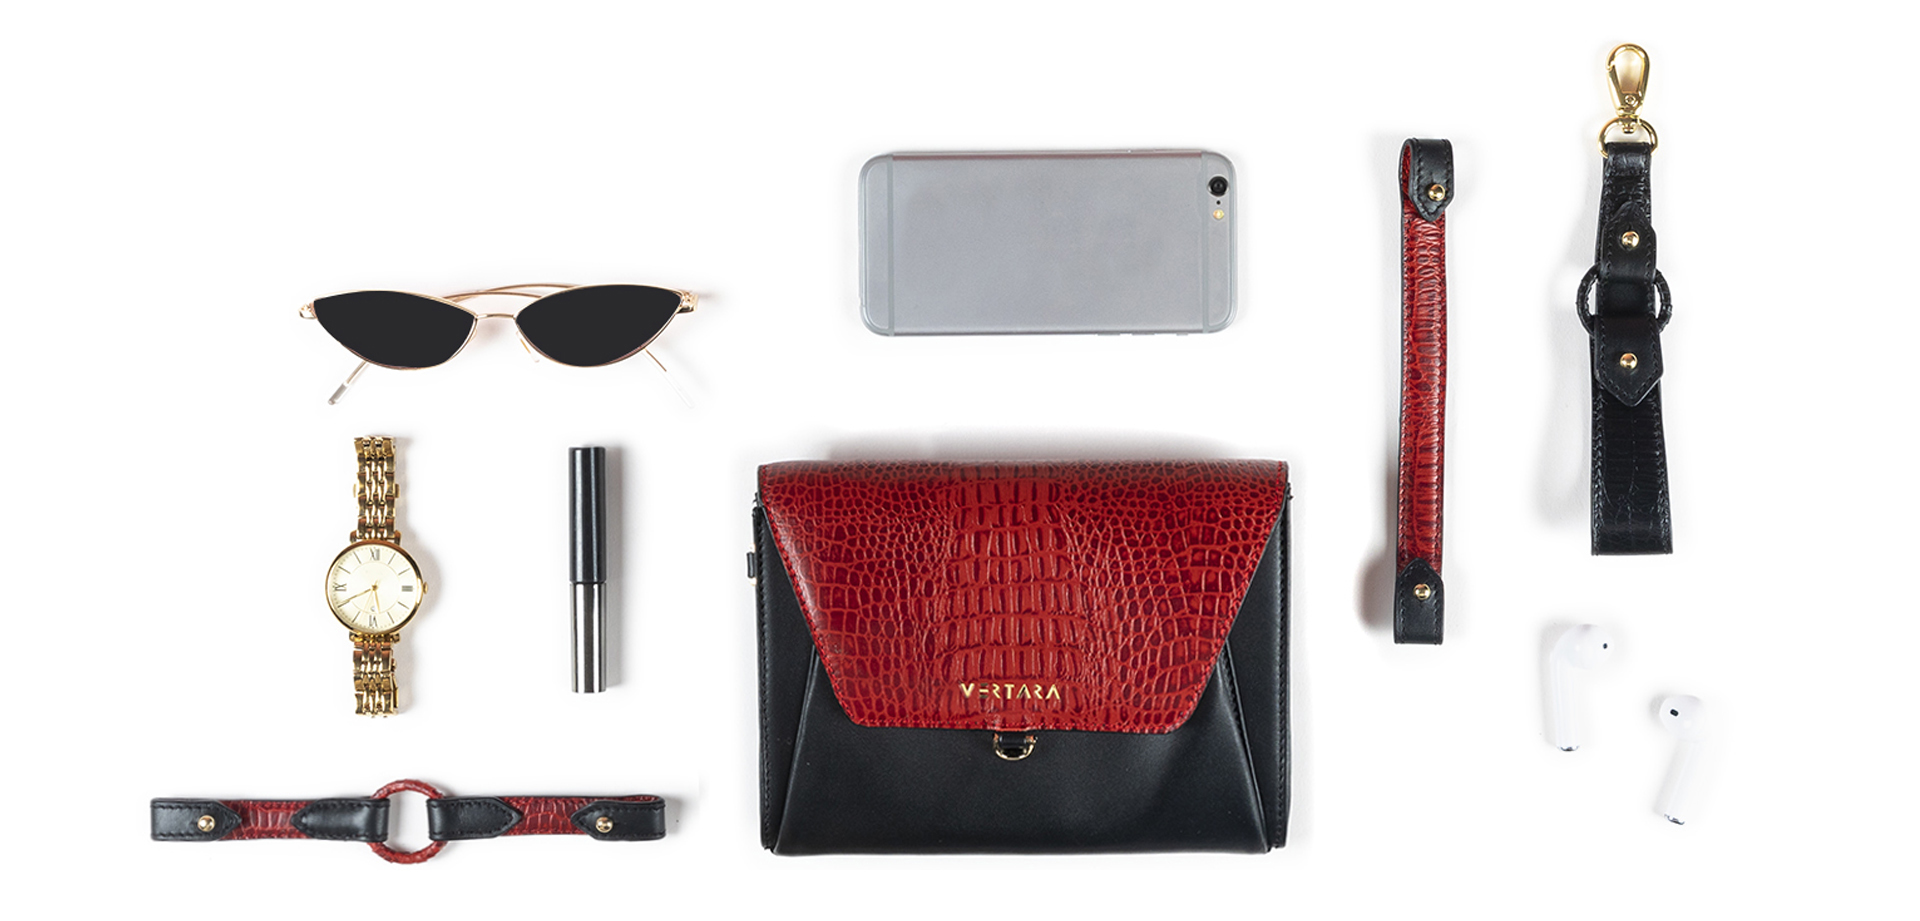 Ember Sleek Wallet, Clutch & Wristlet with Ember Bracelets in Premium Black & Red Leather fits cards, cash & phone.